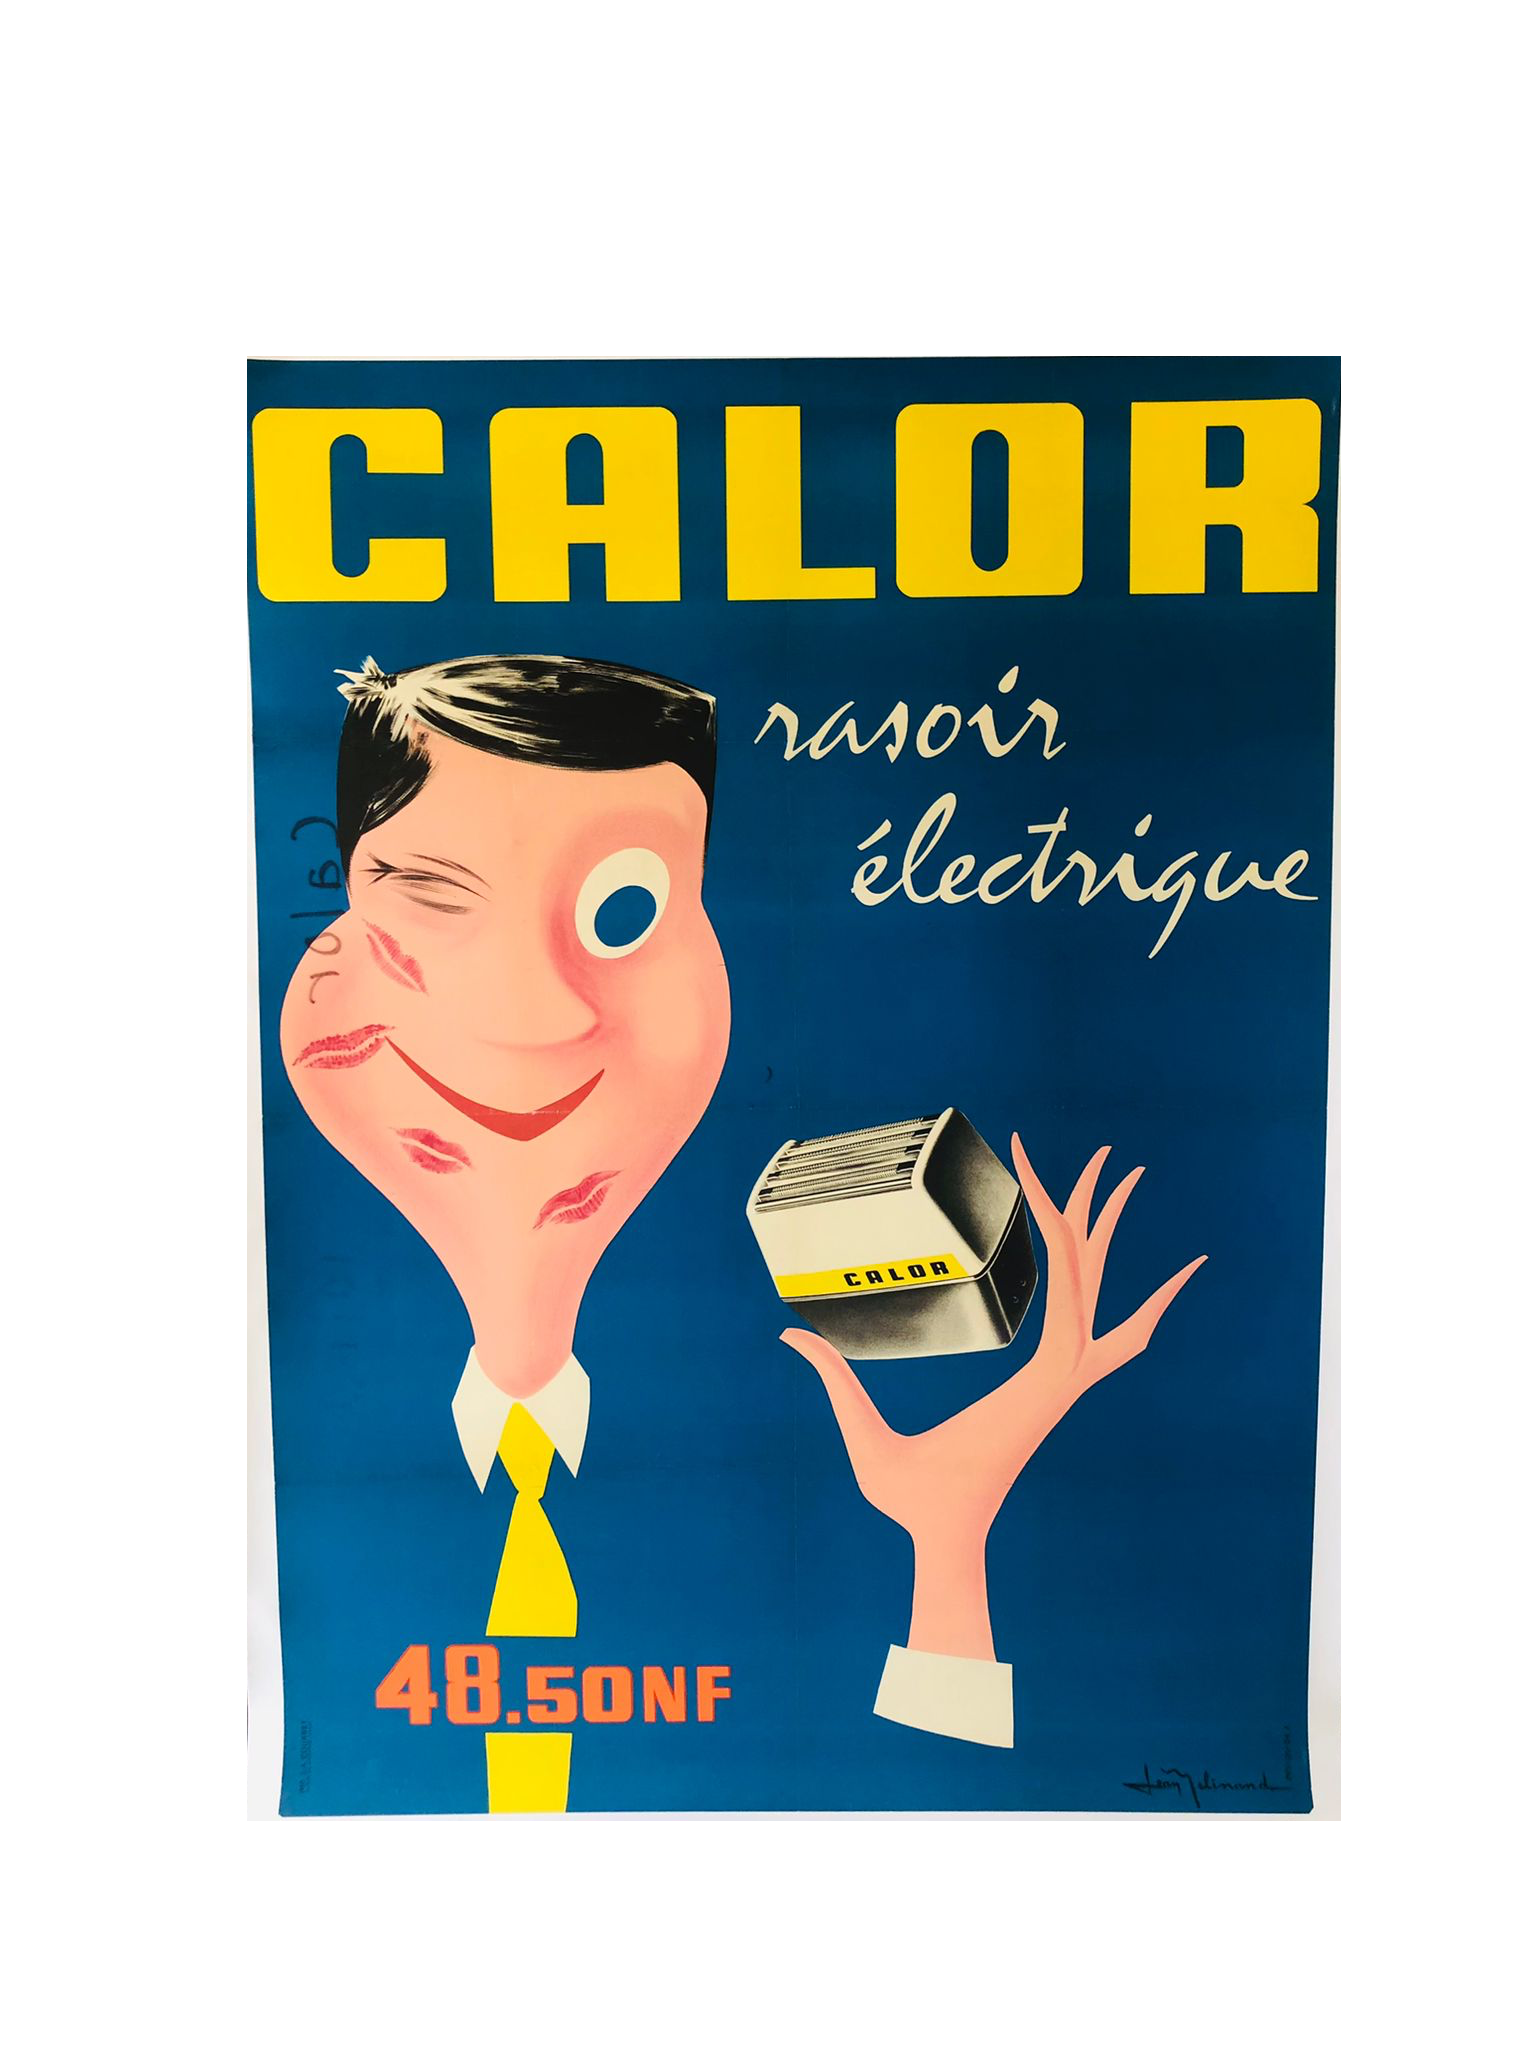 Calor Electric Razor Advertisement